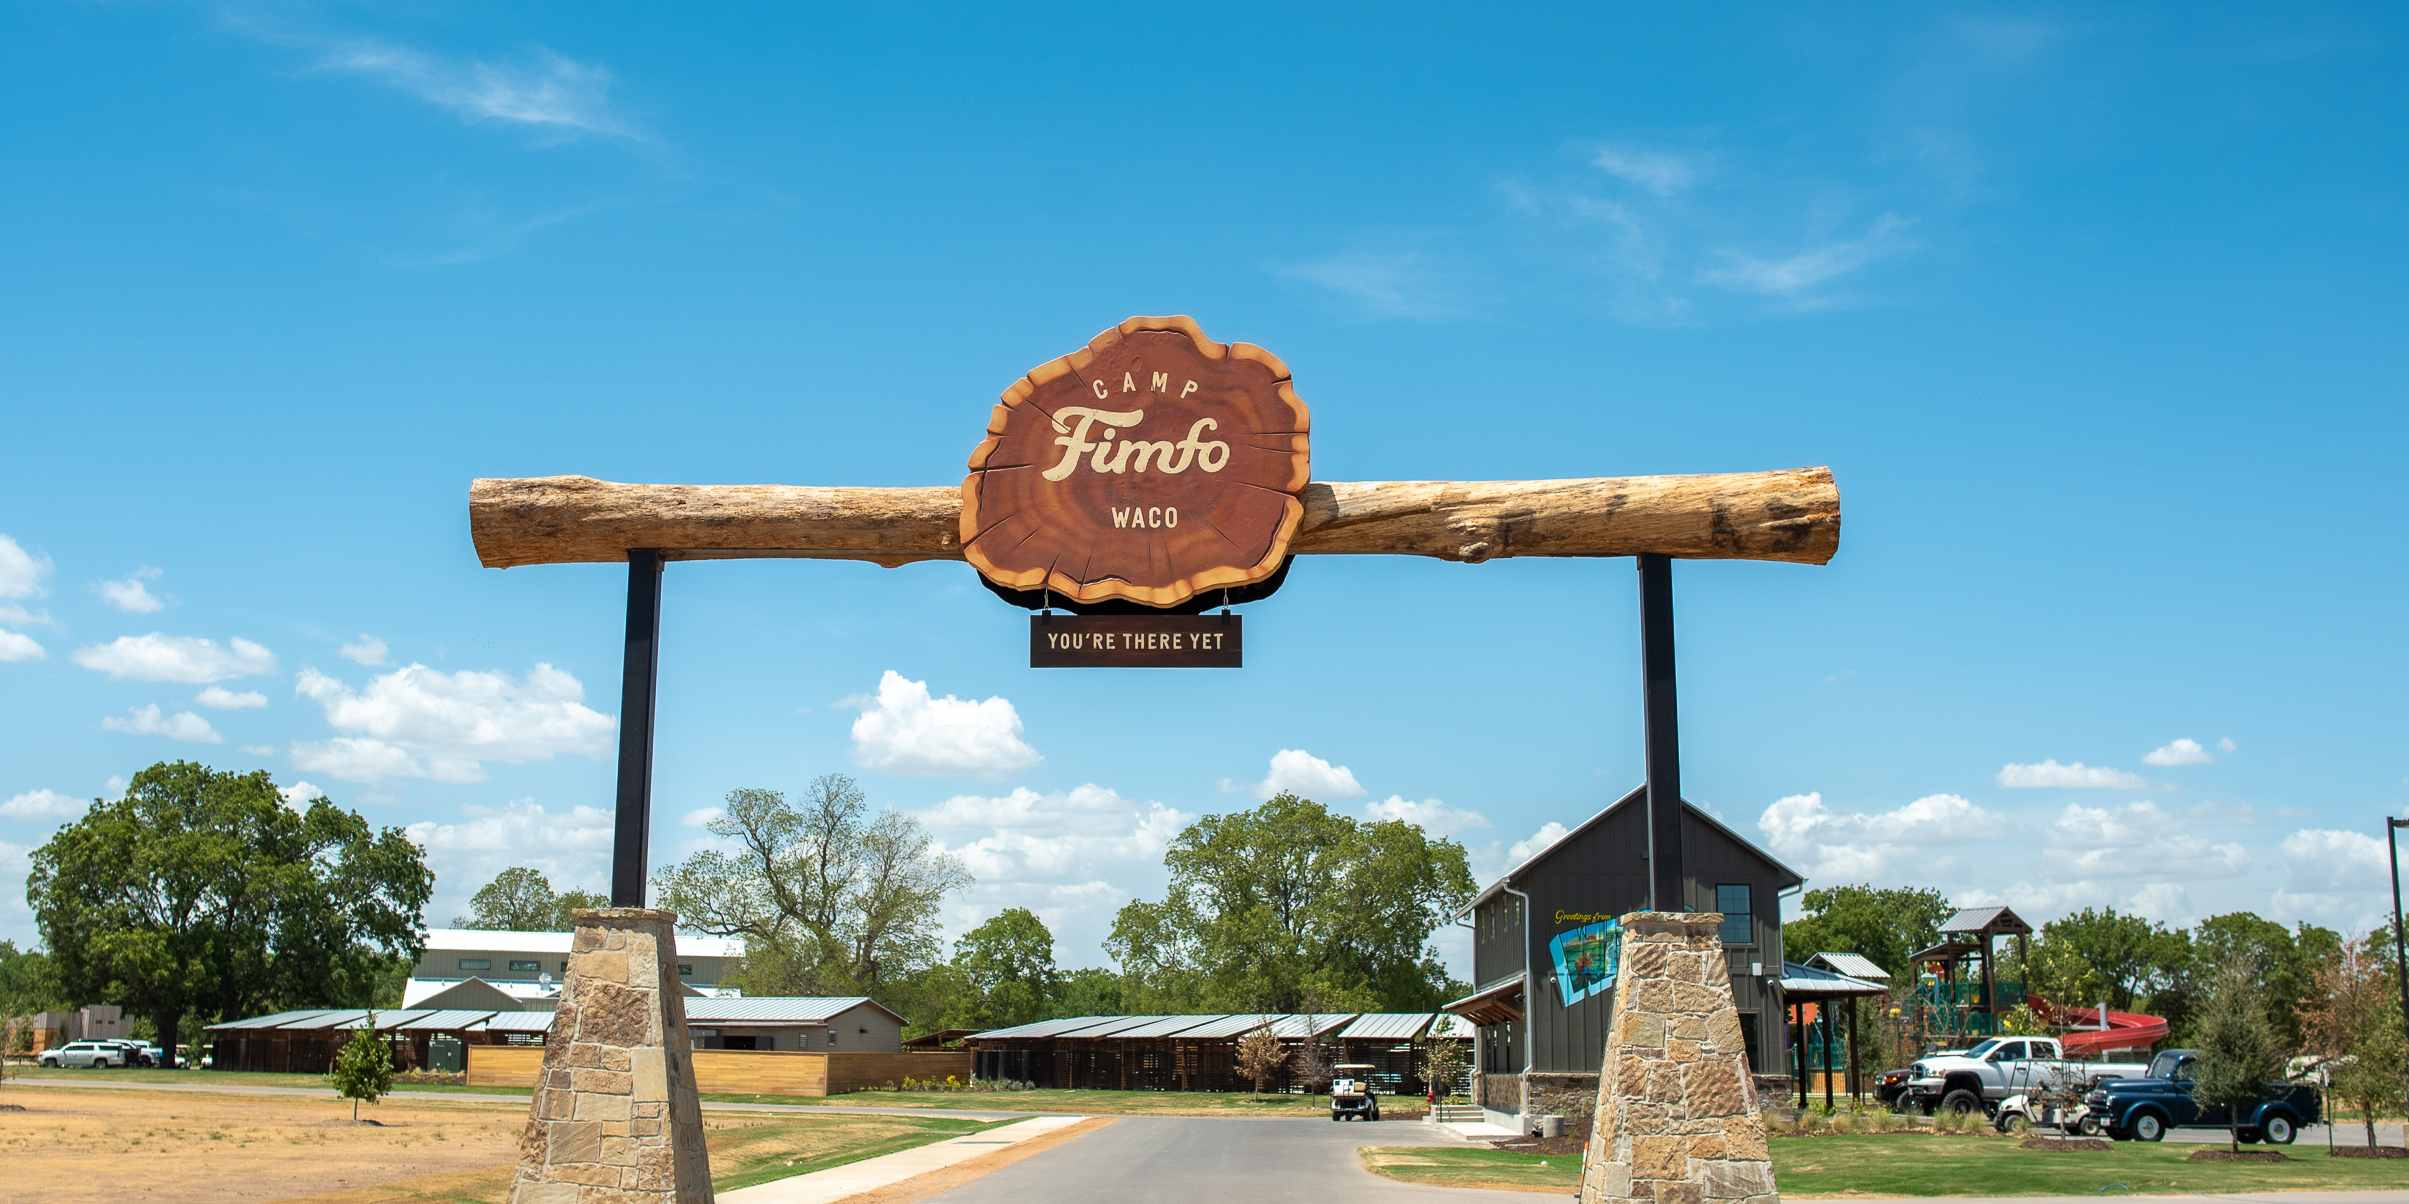 The Camp Fimfo Waco entrance sign in Waco, TX